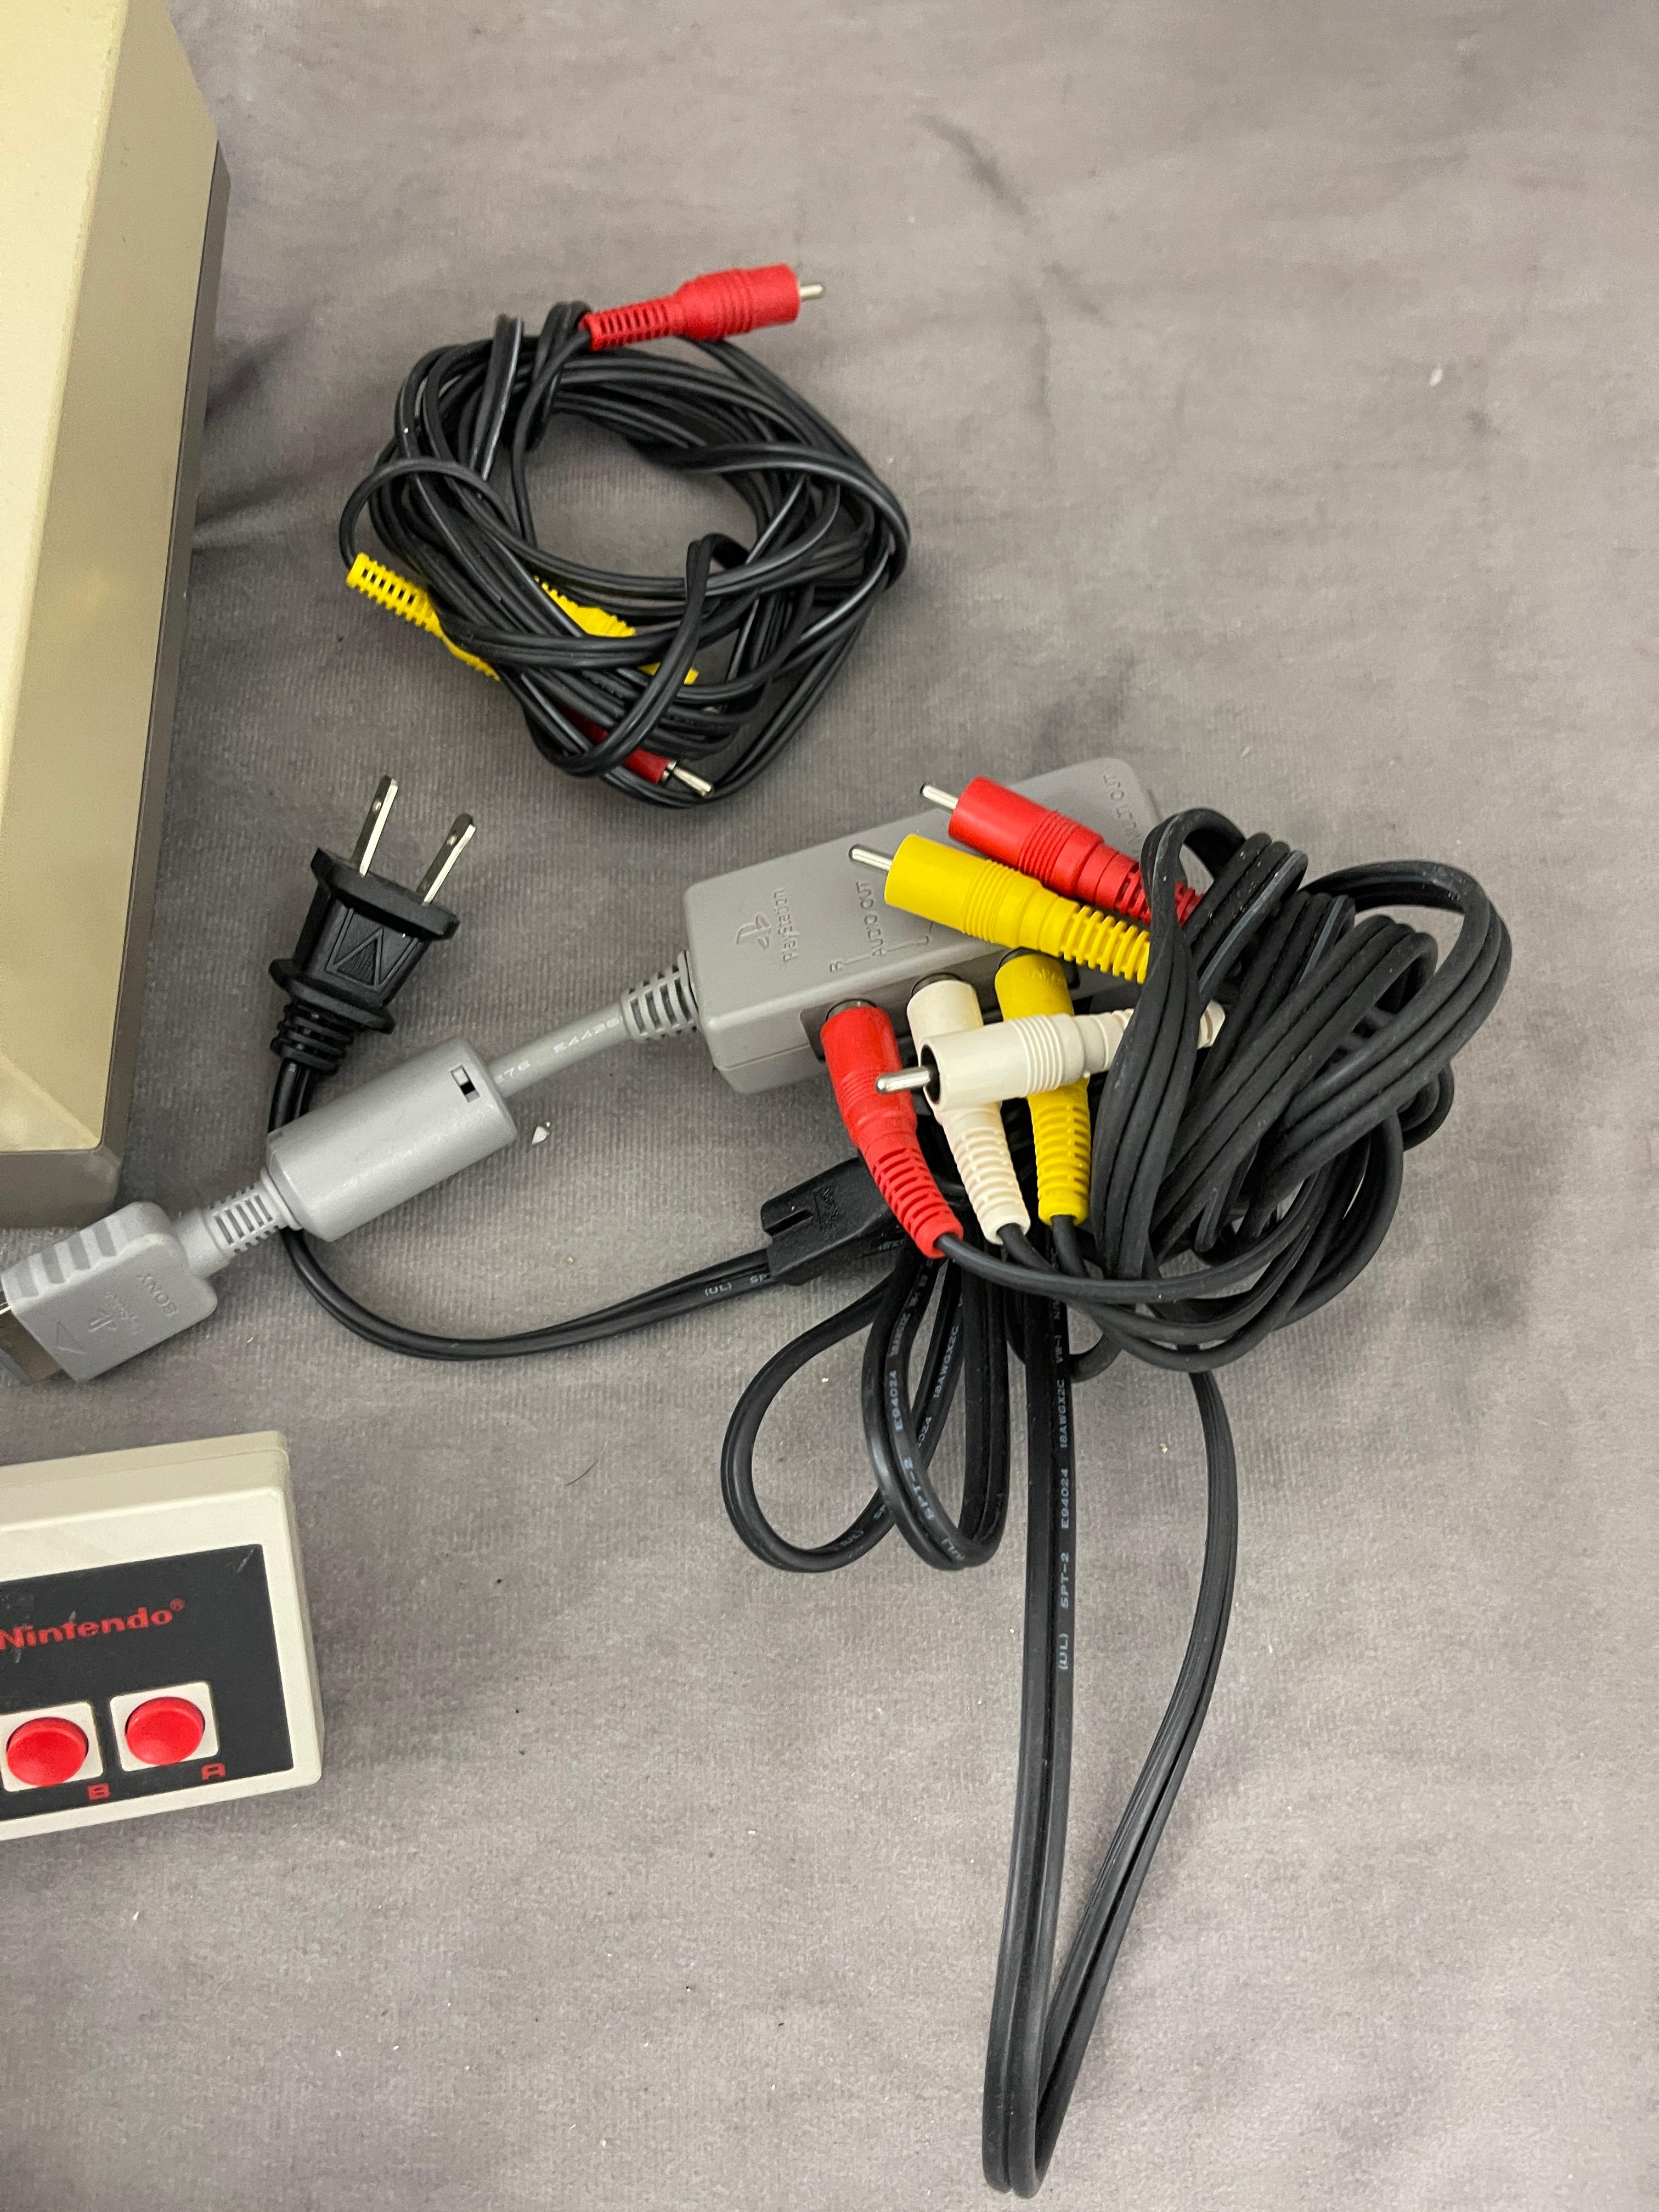 Nintendo SNES Super Nintendo with Cables and Nintendo Zapper